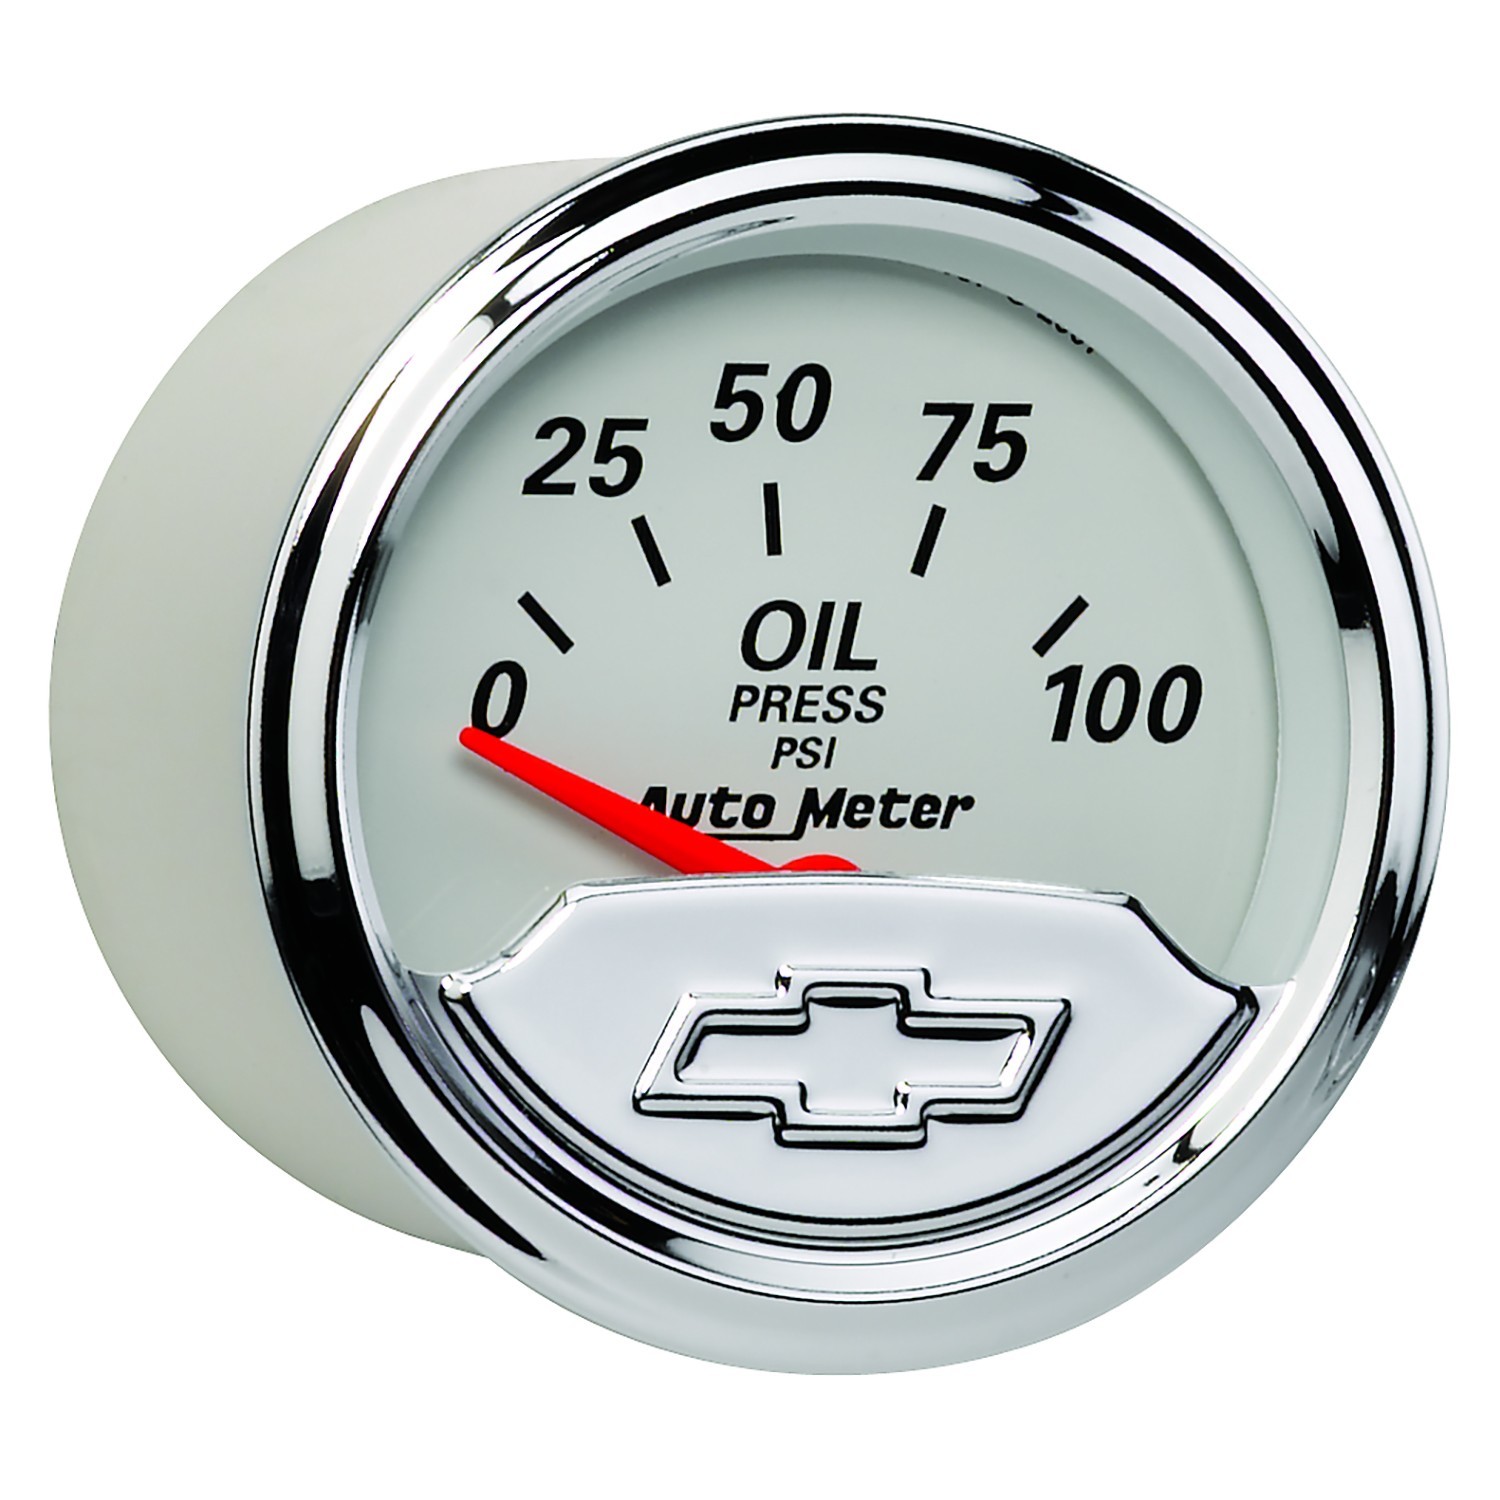 Auto Meter Oil Pressure Gauge, Artic White, 0-100 psi, Electric, Analog, Short Sweep, 2-1/16" Diameter, Chrome Chevy Bowtie Logo